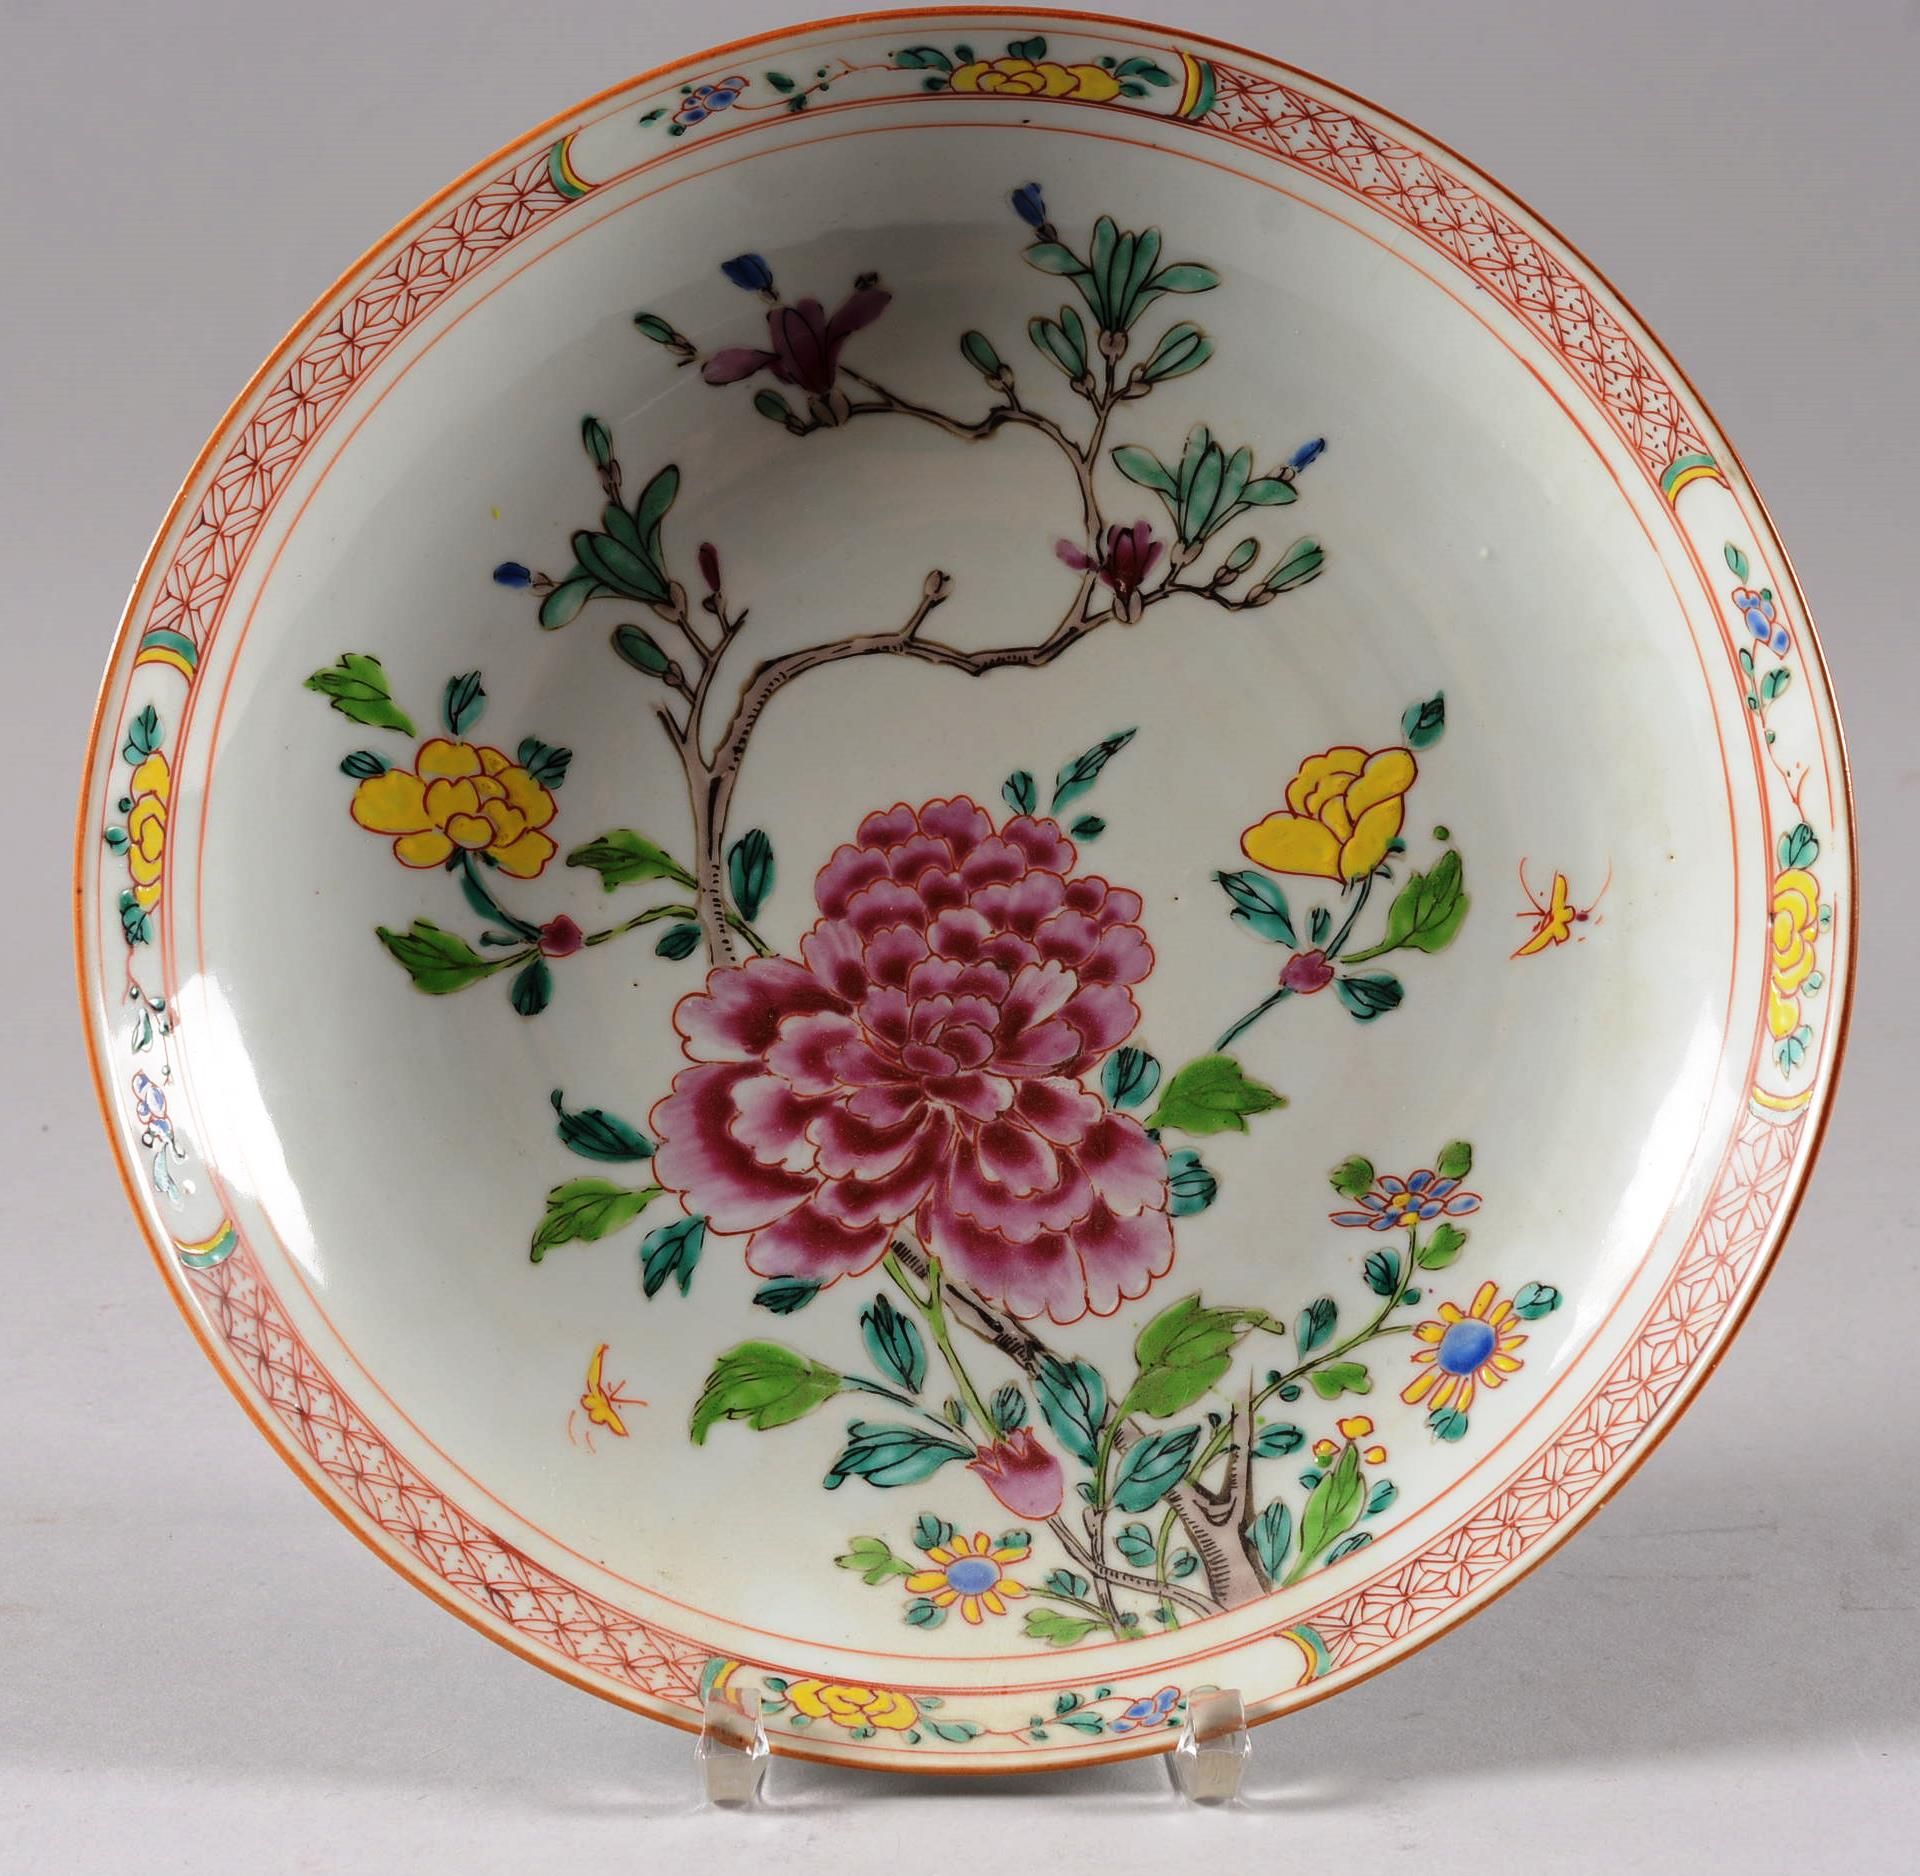 Coupe circulaire en porcelaine chinoise CHINA.

Cuenco circular de porcelana chi&hellip;